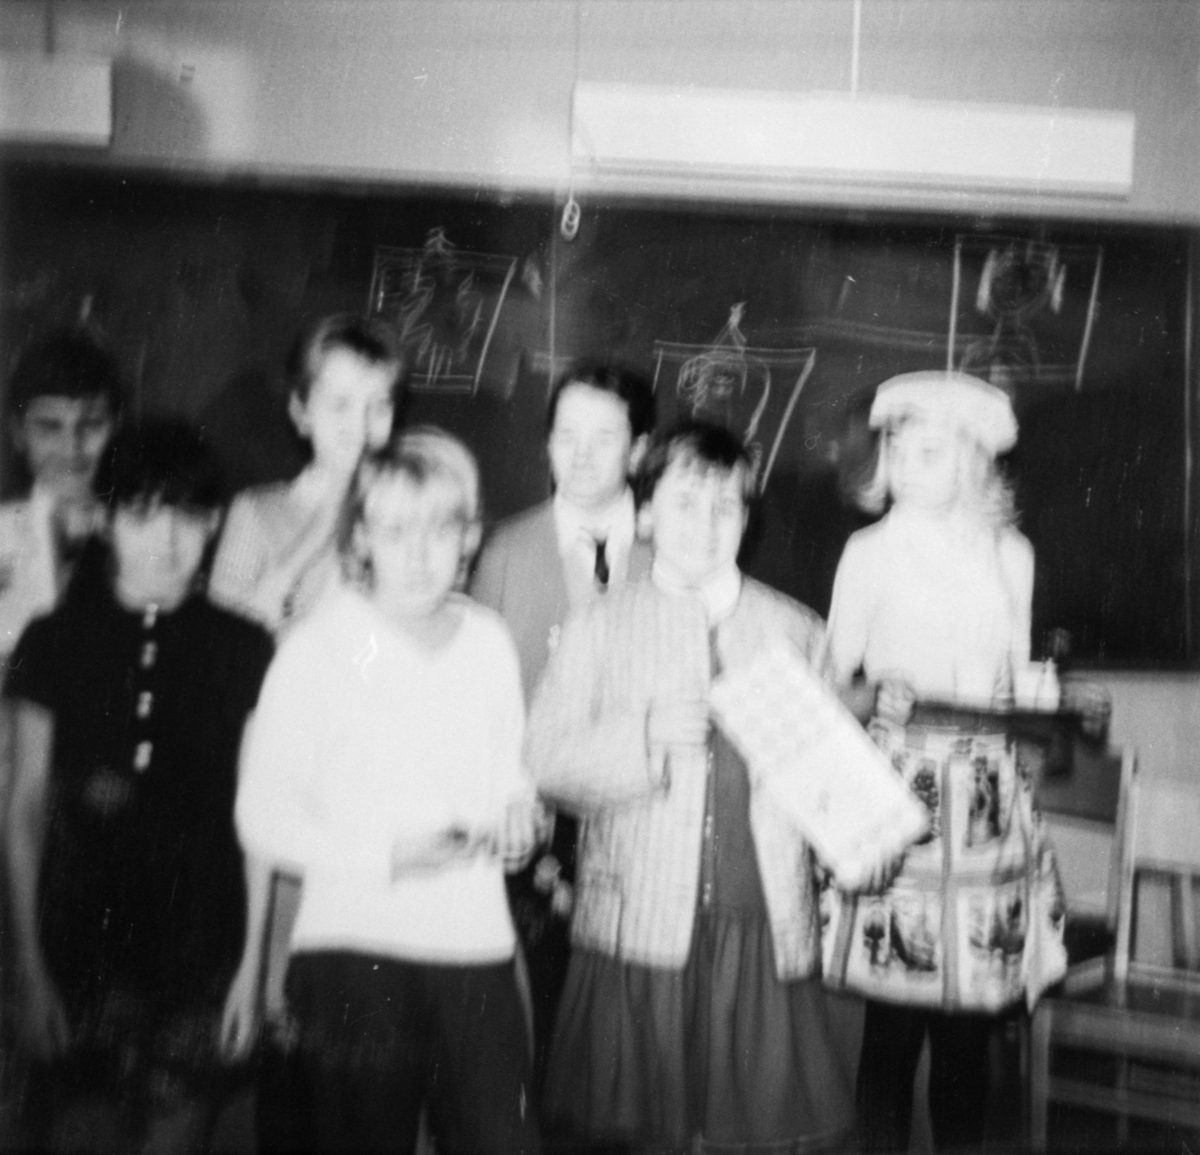 Klassens timme 4:de klass. Övre raden: Ester .W., Barbro Johansson, Birgitta. 
Nedre raden: Lena, Pirjo Lindfors, Maine Wennerlöw, Yvonne.